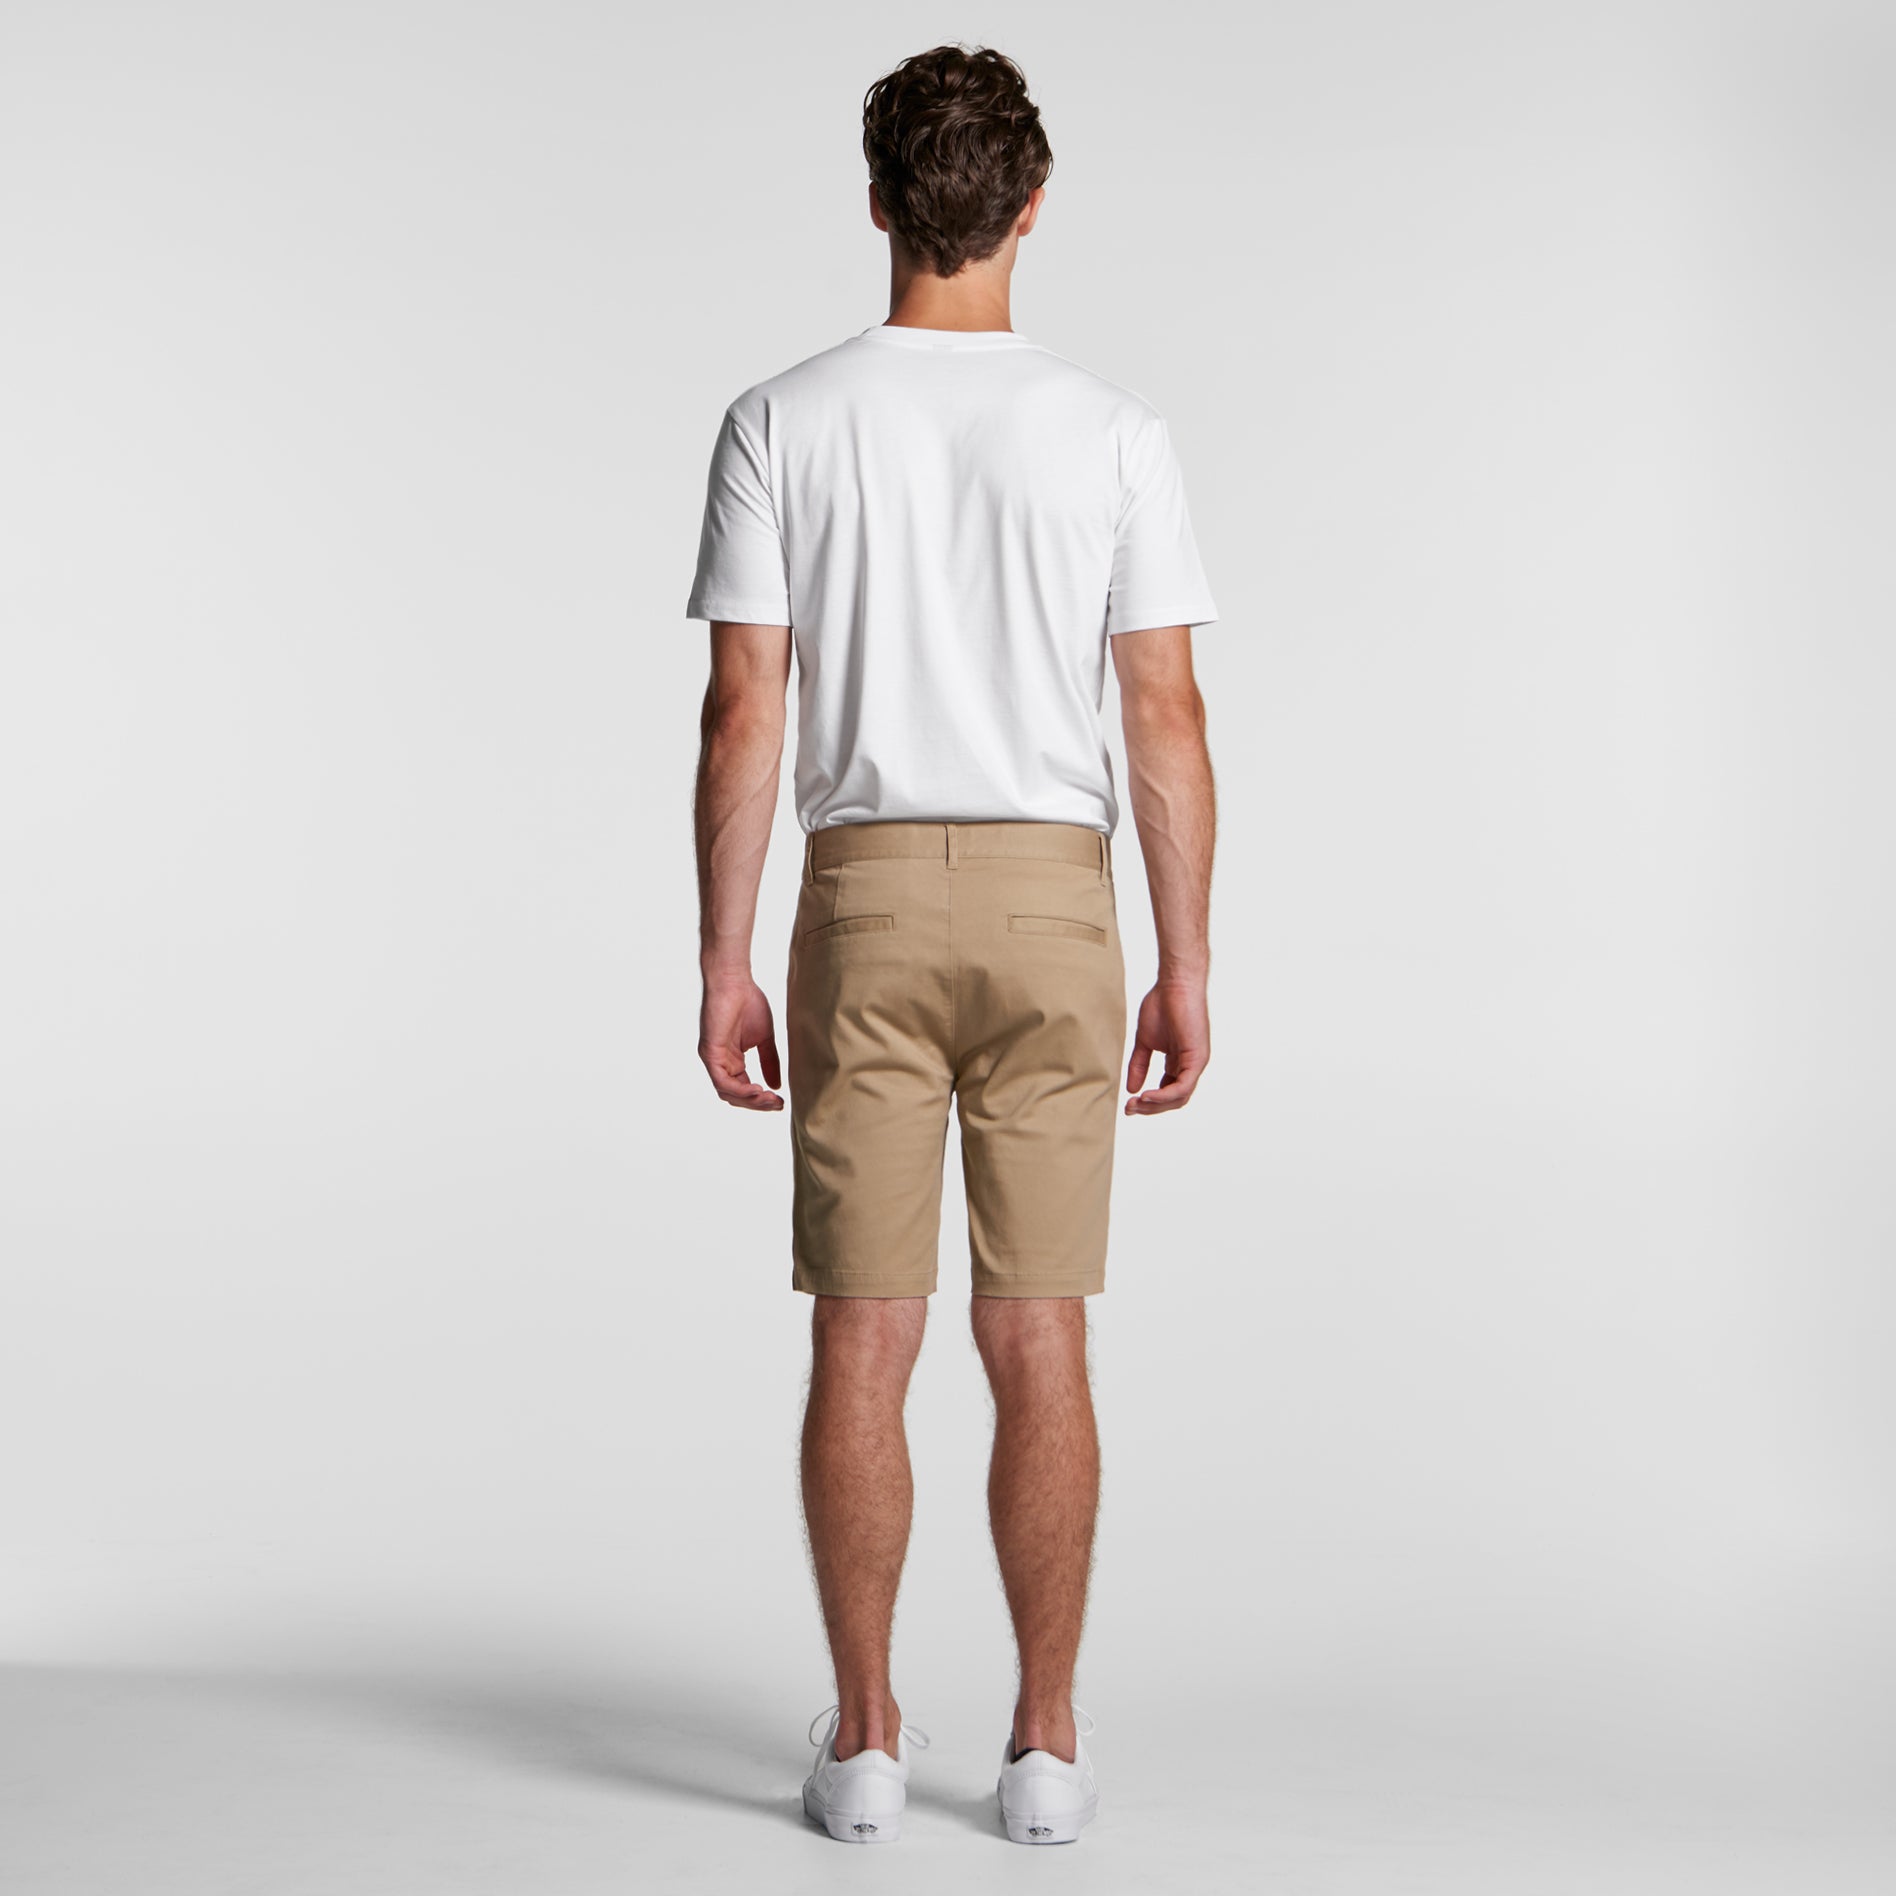 Mens Plain Shorts - Shorts - The Fabric Printer